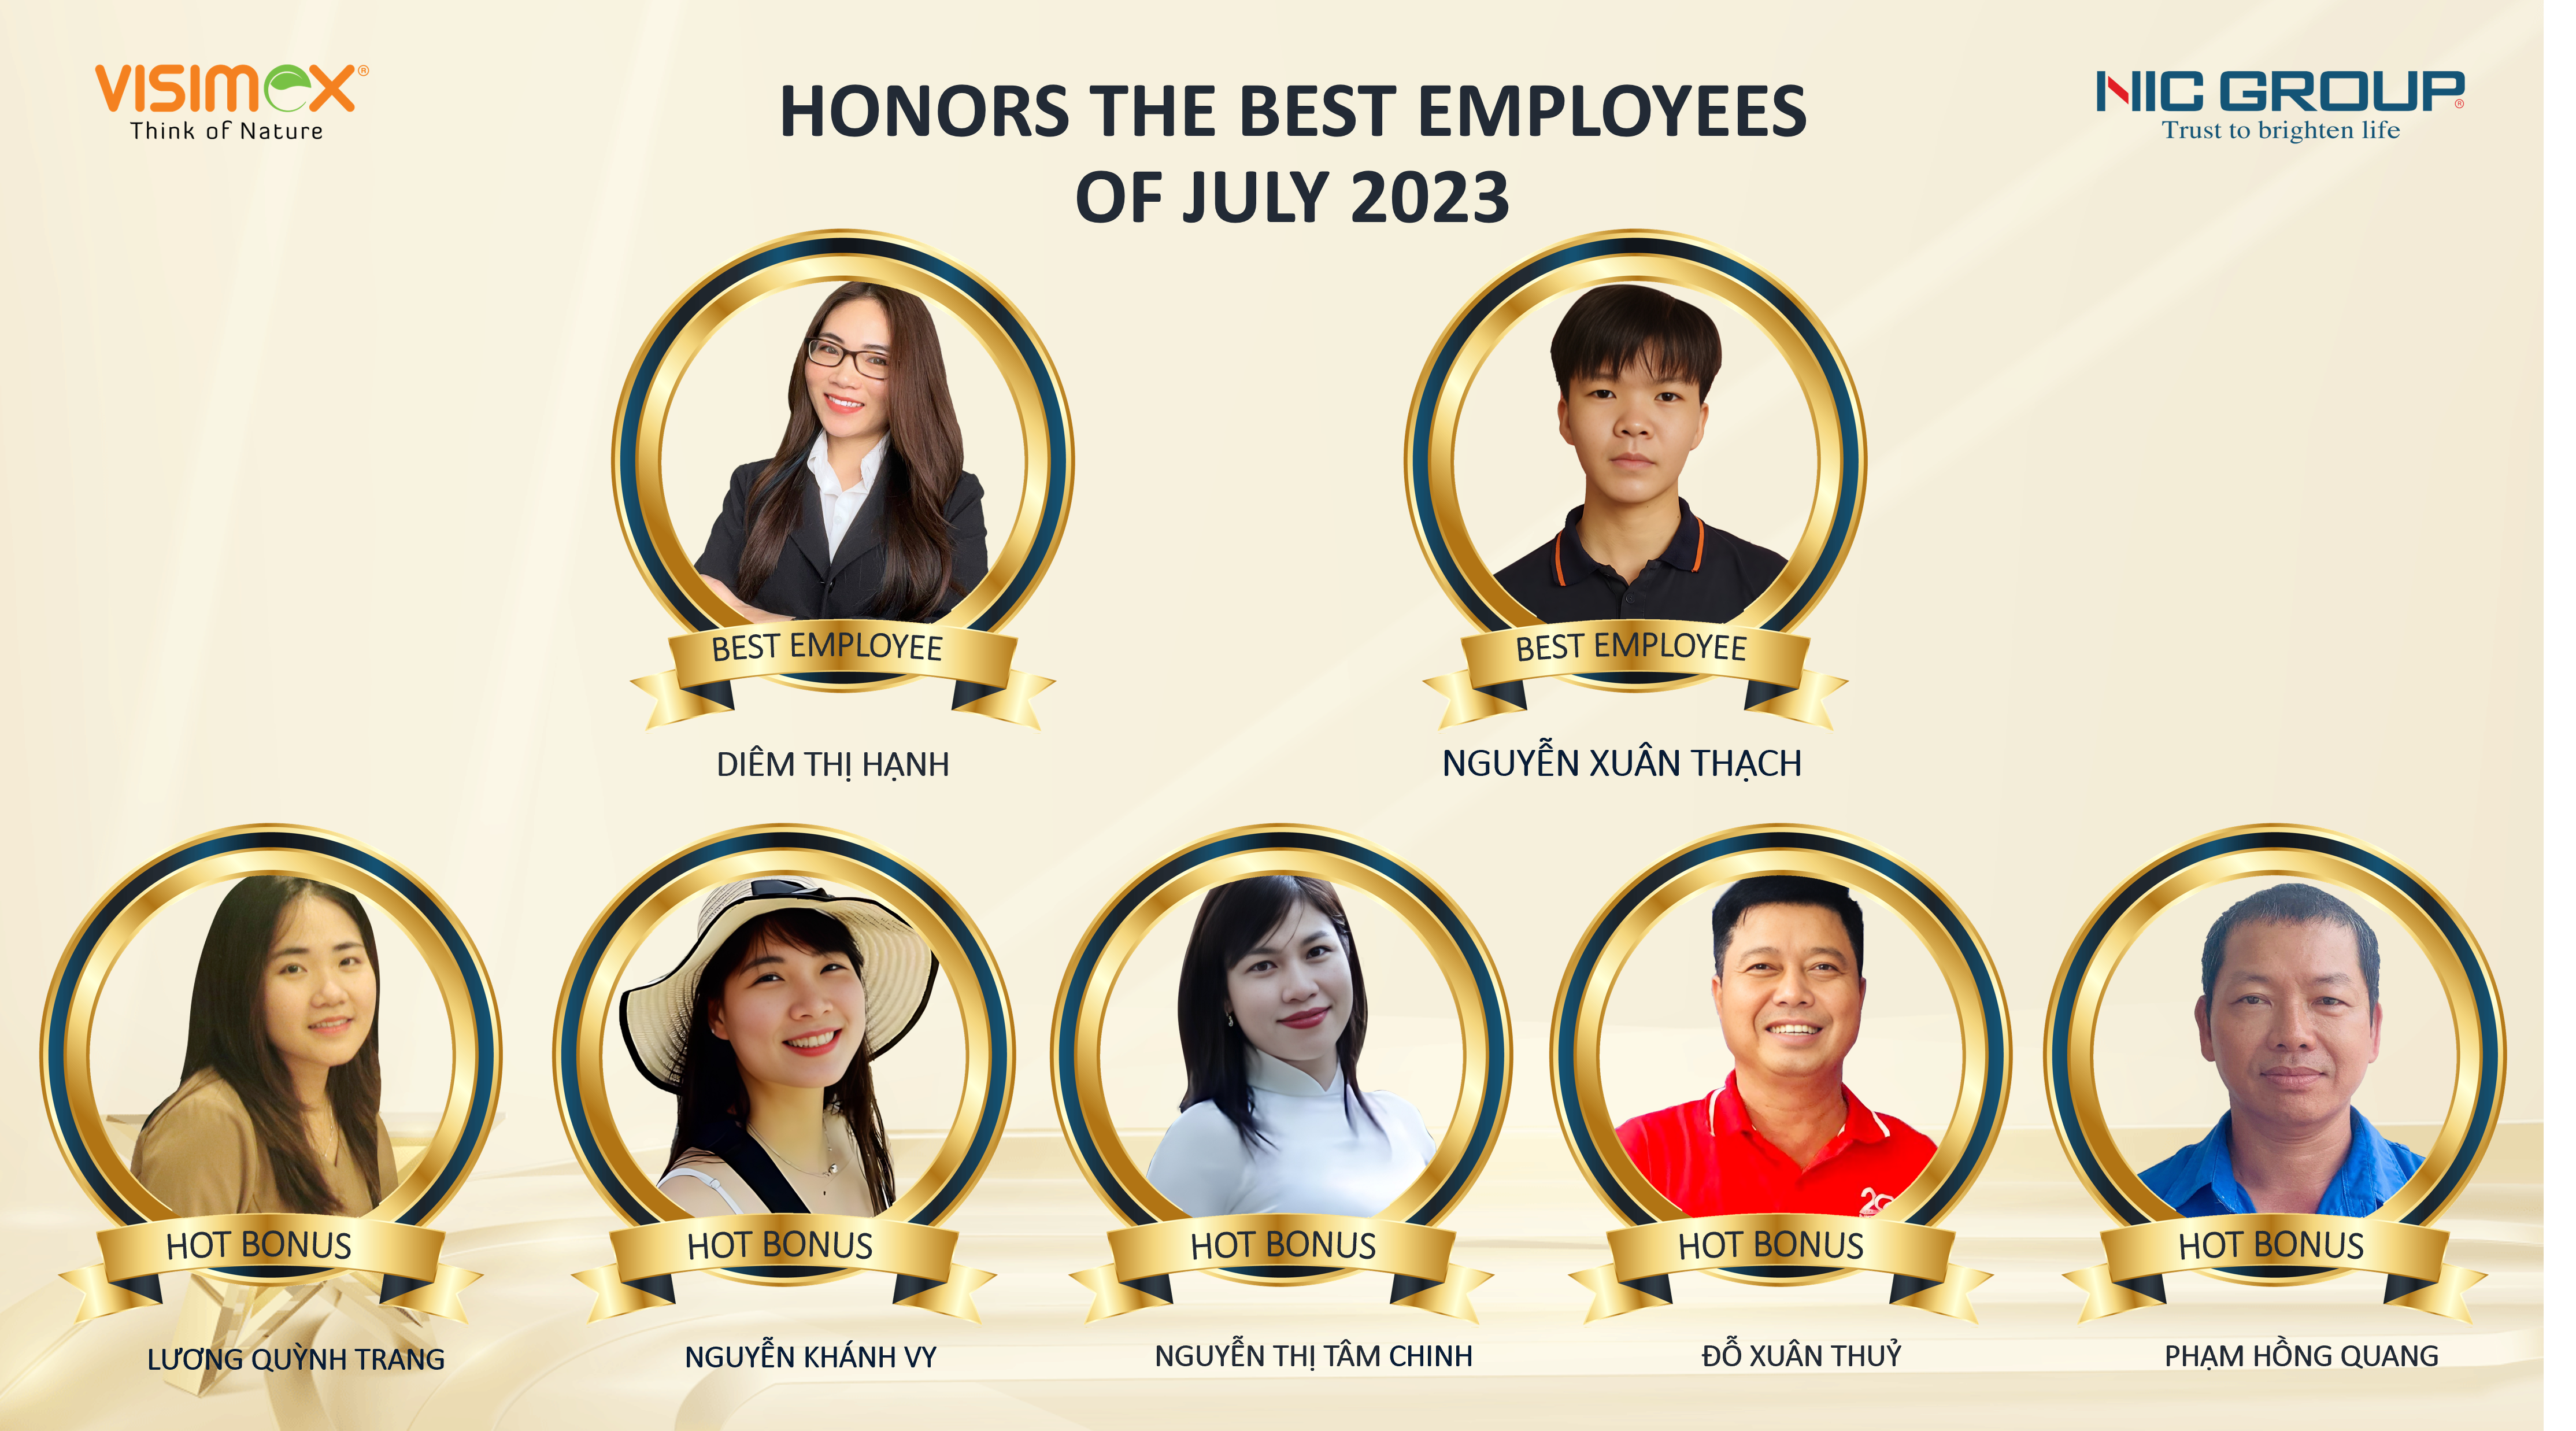 Best employees of July 2023